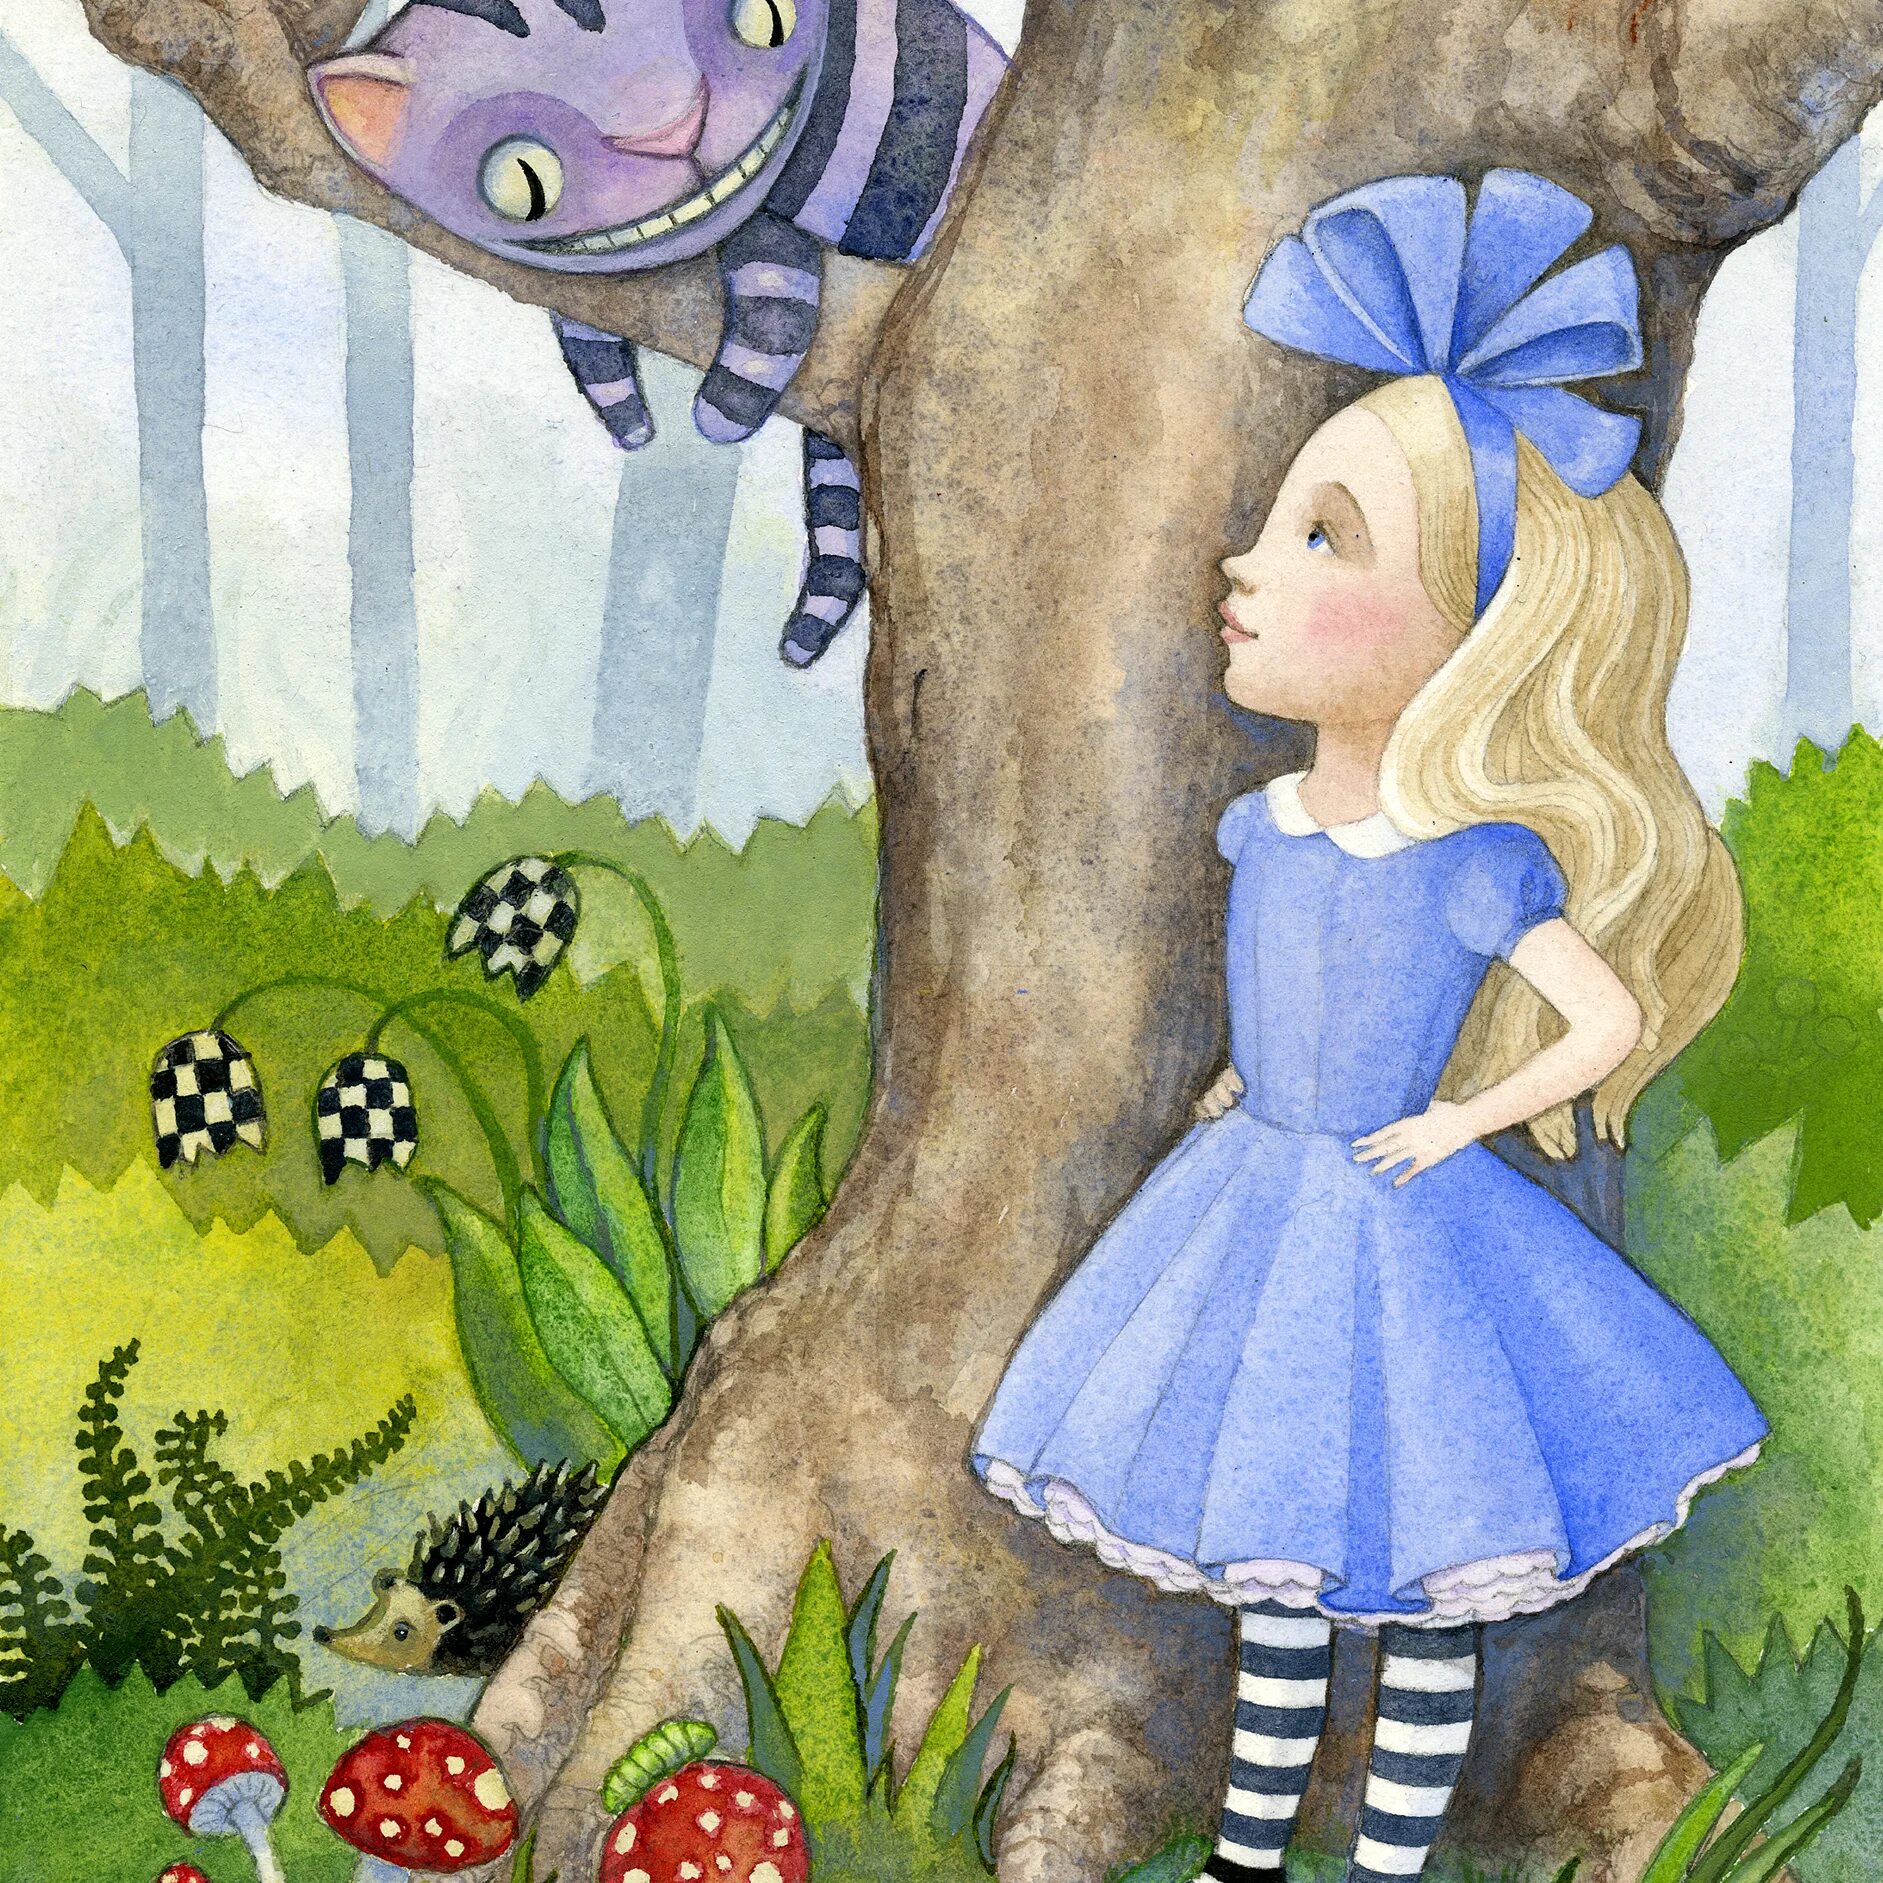 Сказка алиса в стране чудес словами. Сказки как Алиса в стране чудес. Иллюстрация к сказке Алиса в стране чудес. Рисунок по книге Алиса в стране чудес. Алиса в стране чудес рисунок.